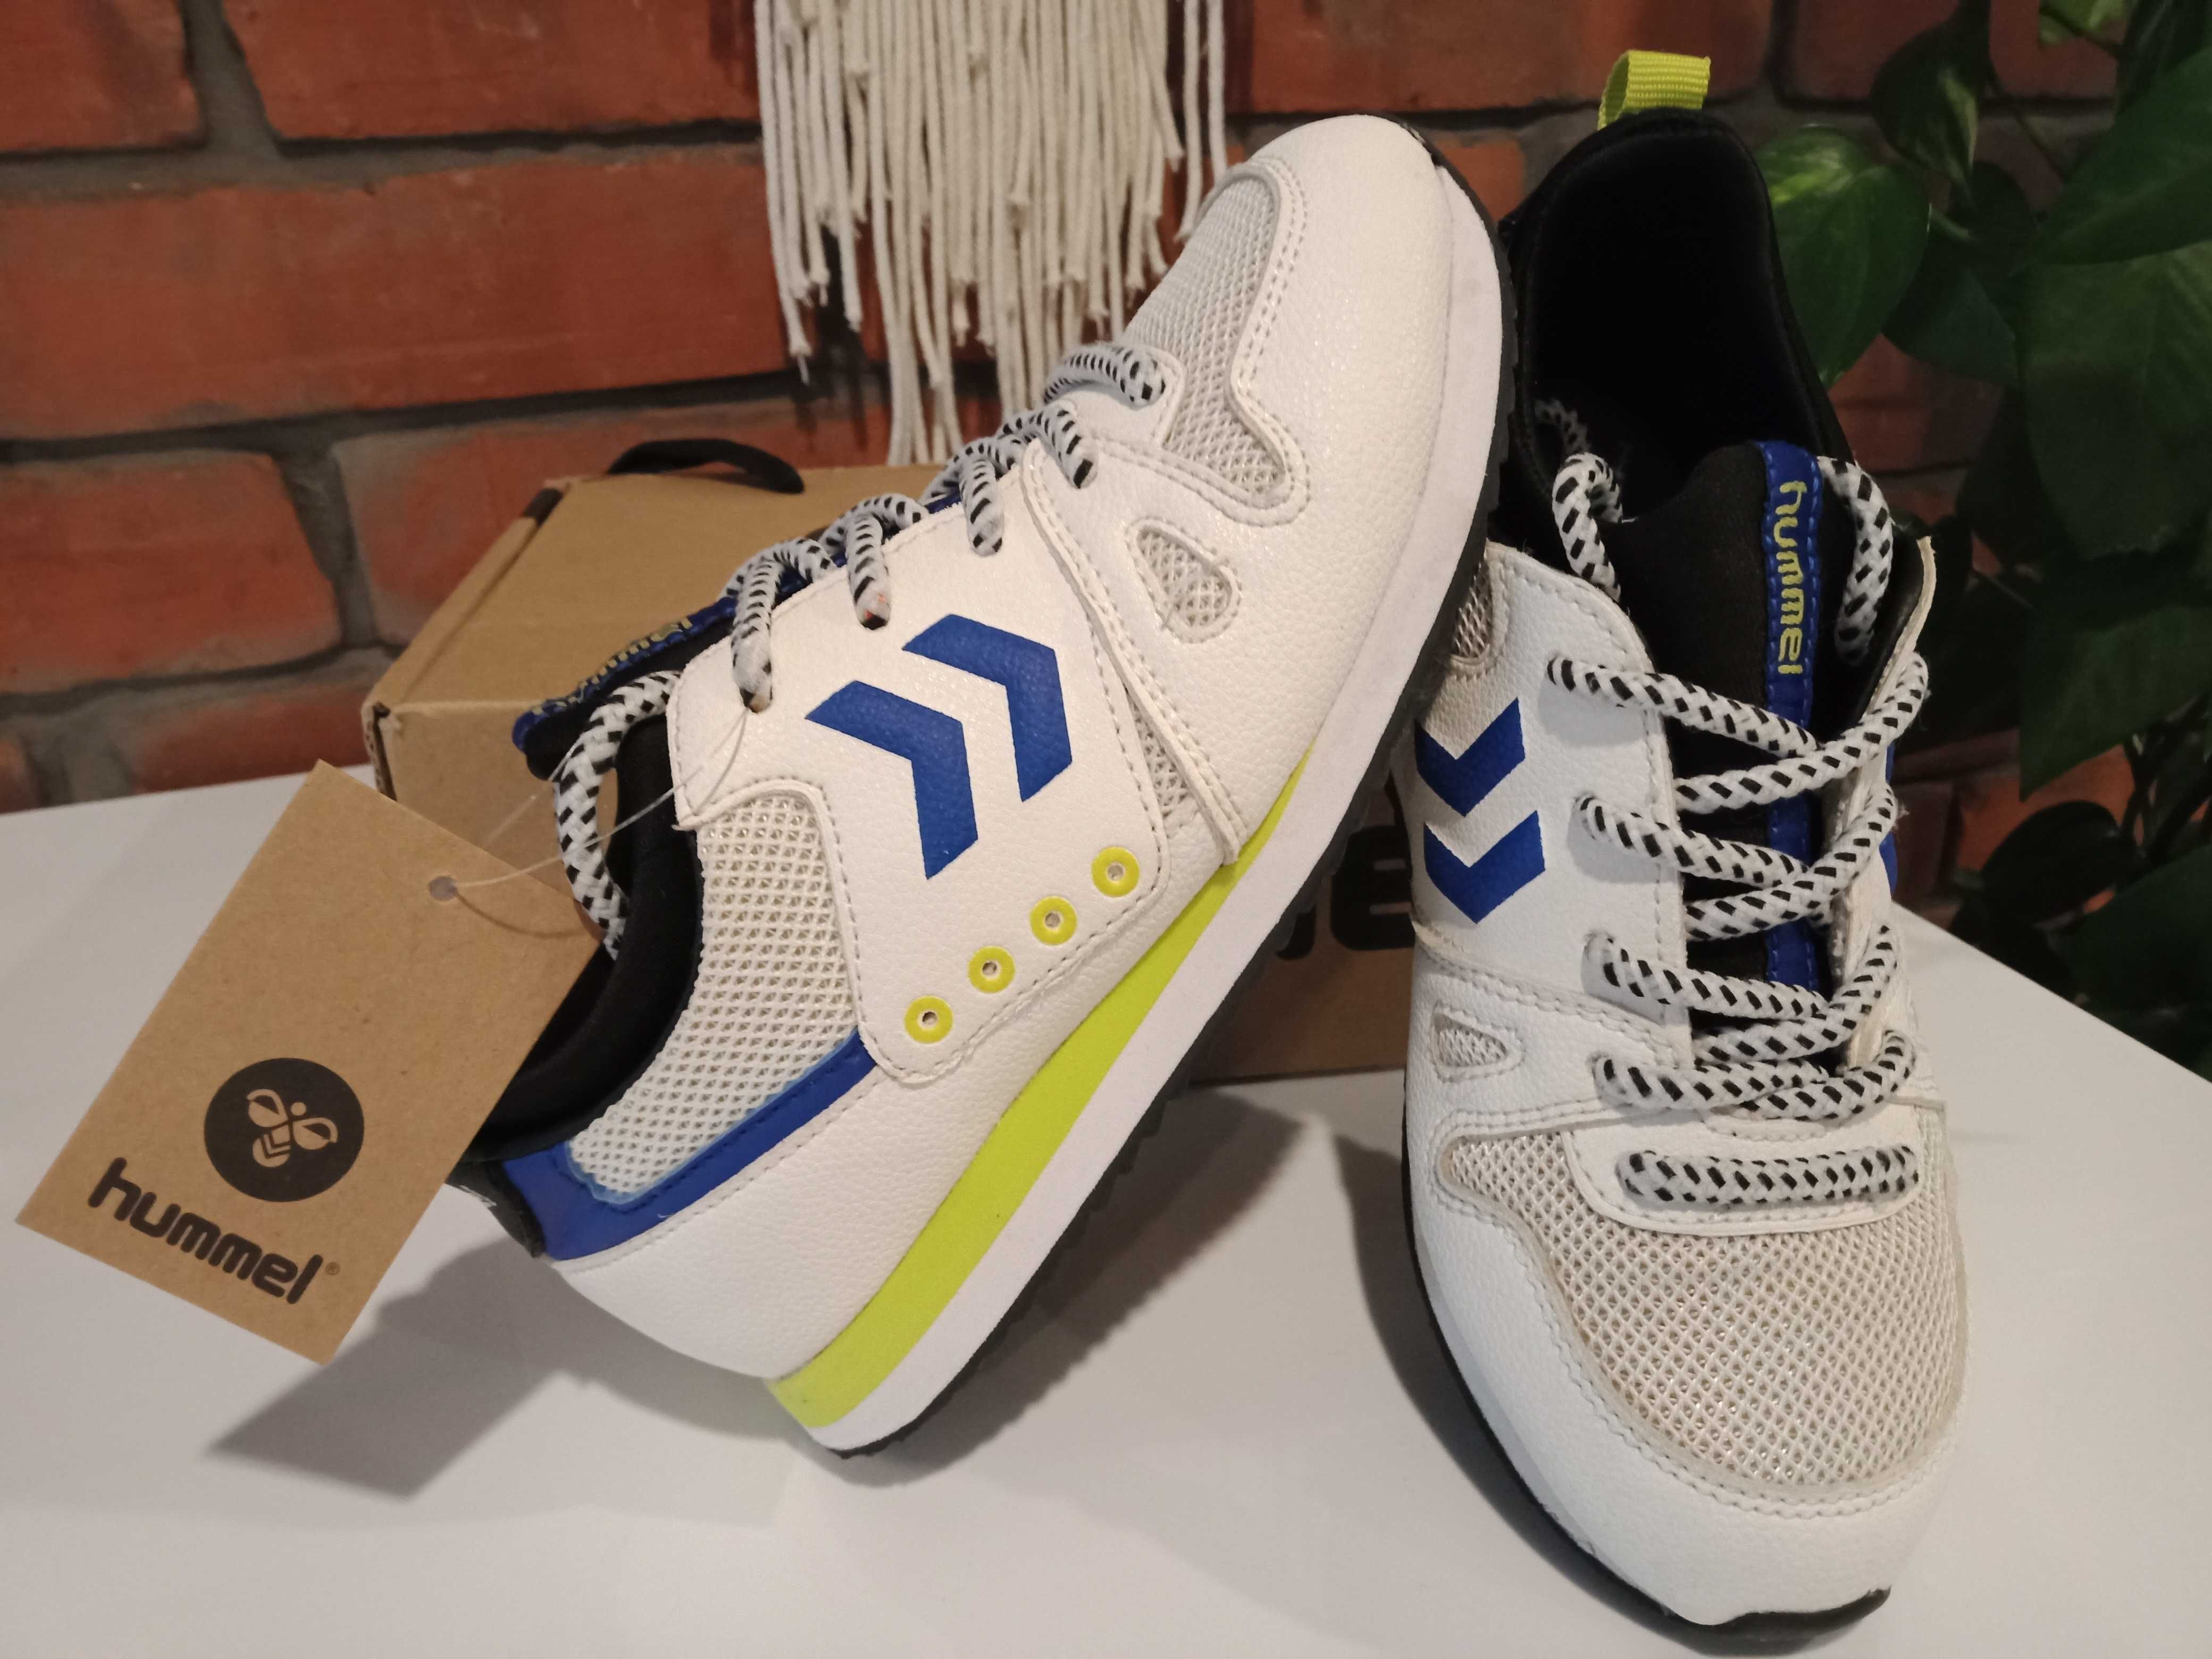 HUMMEL marathona NOWE, adidasy sneakersy unisex rozm 31 (18 cm)